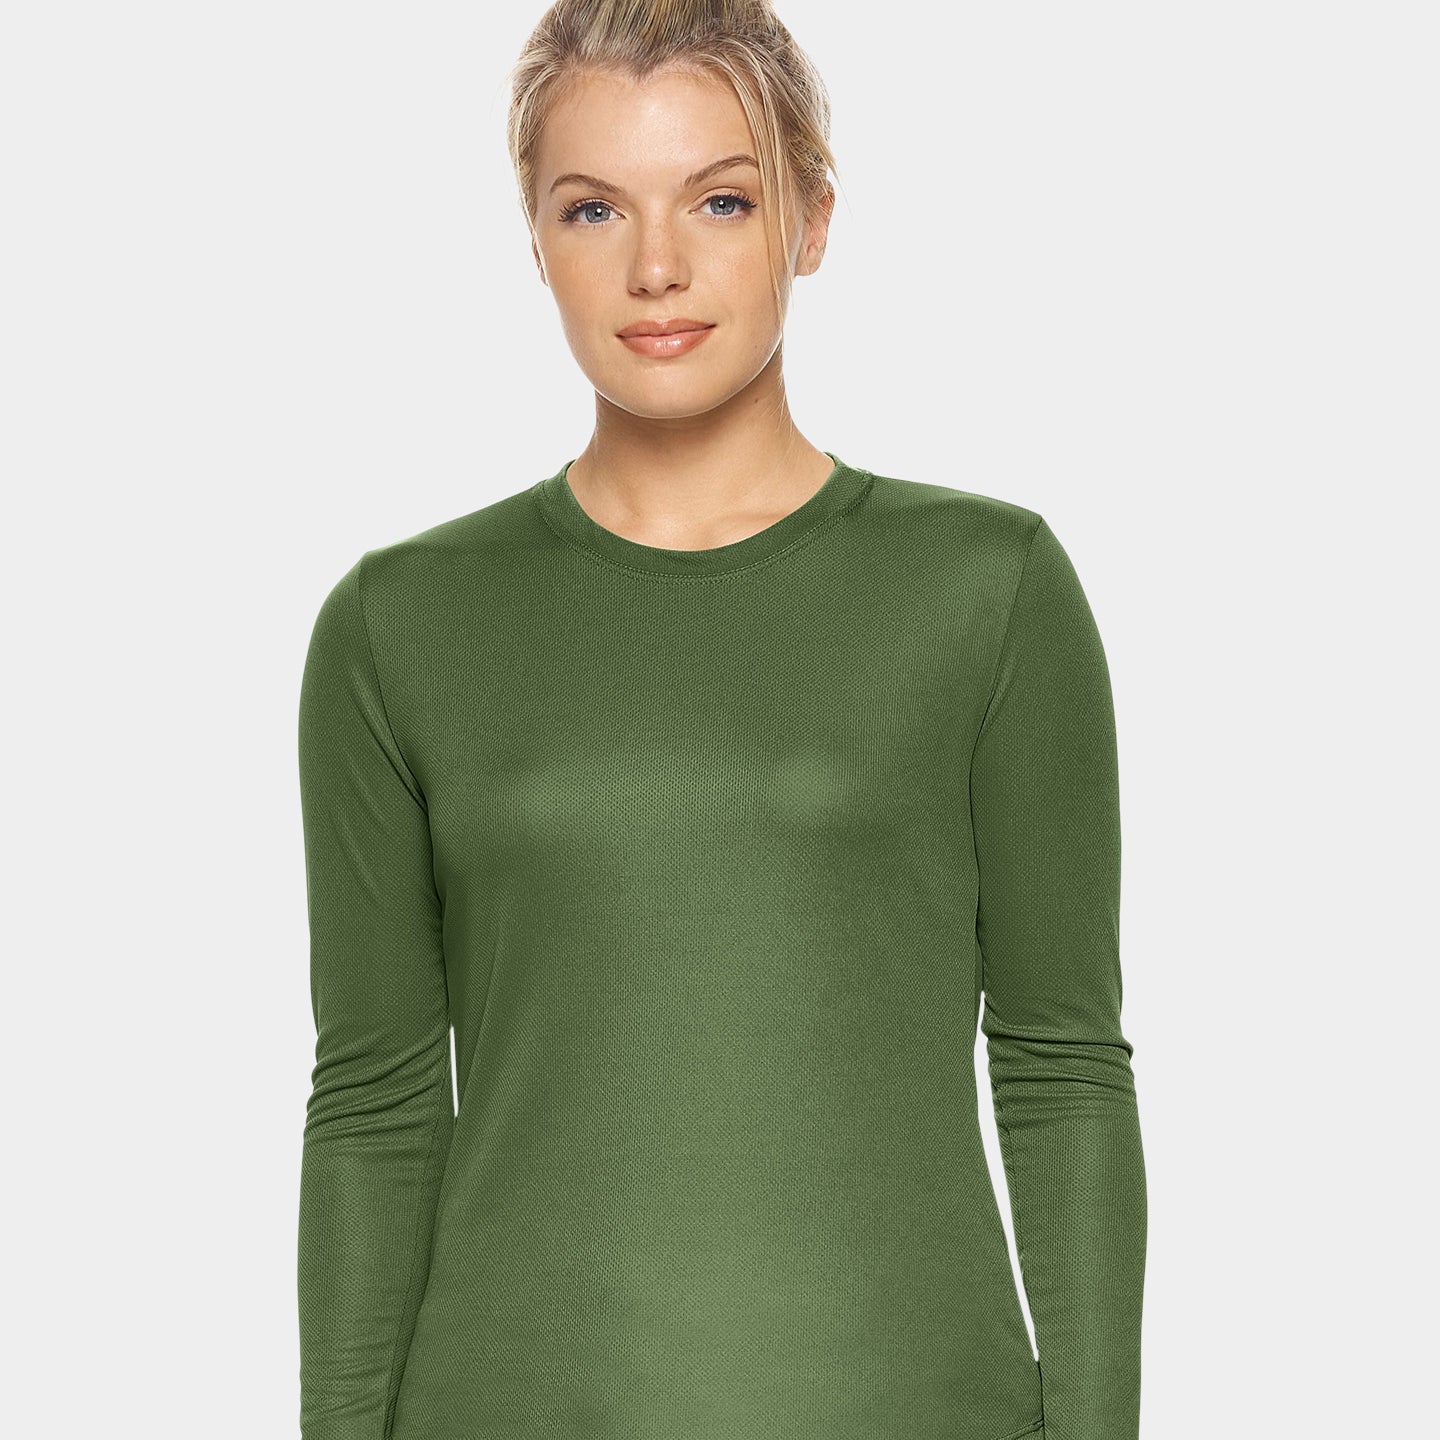 Expert Brand Oxymesh Women's Crewneck Performance Long Sleeve, XL, Military Green A1